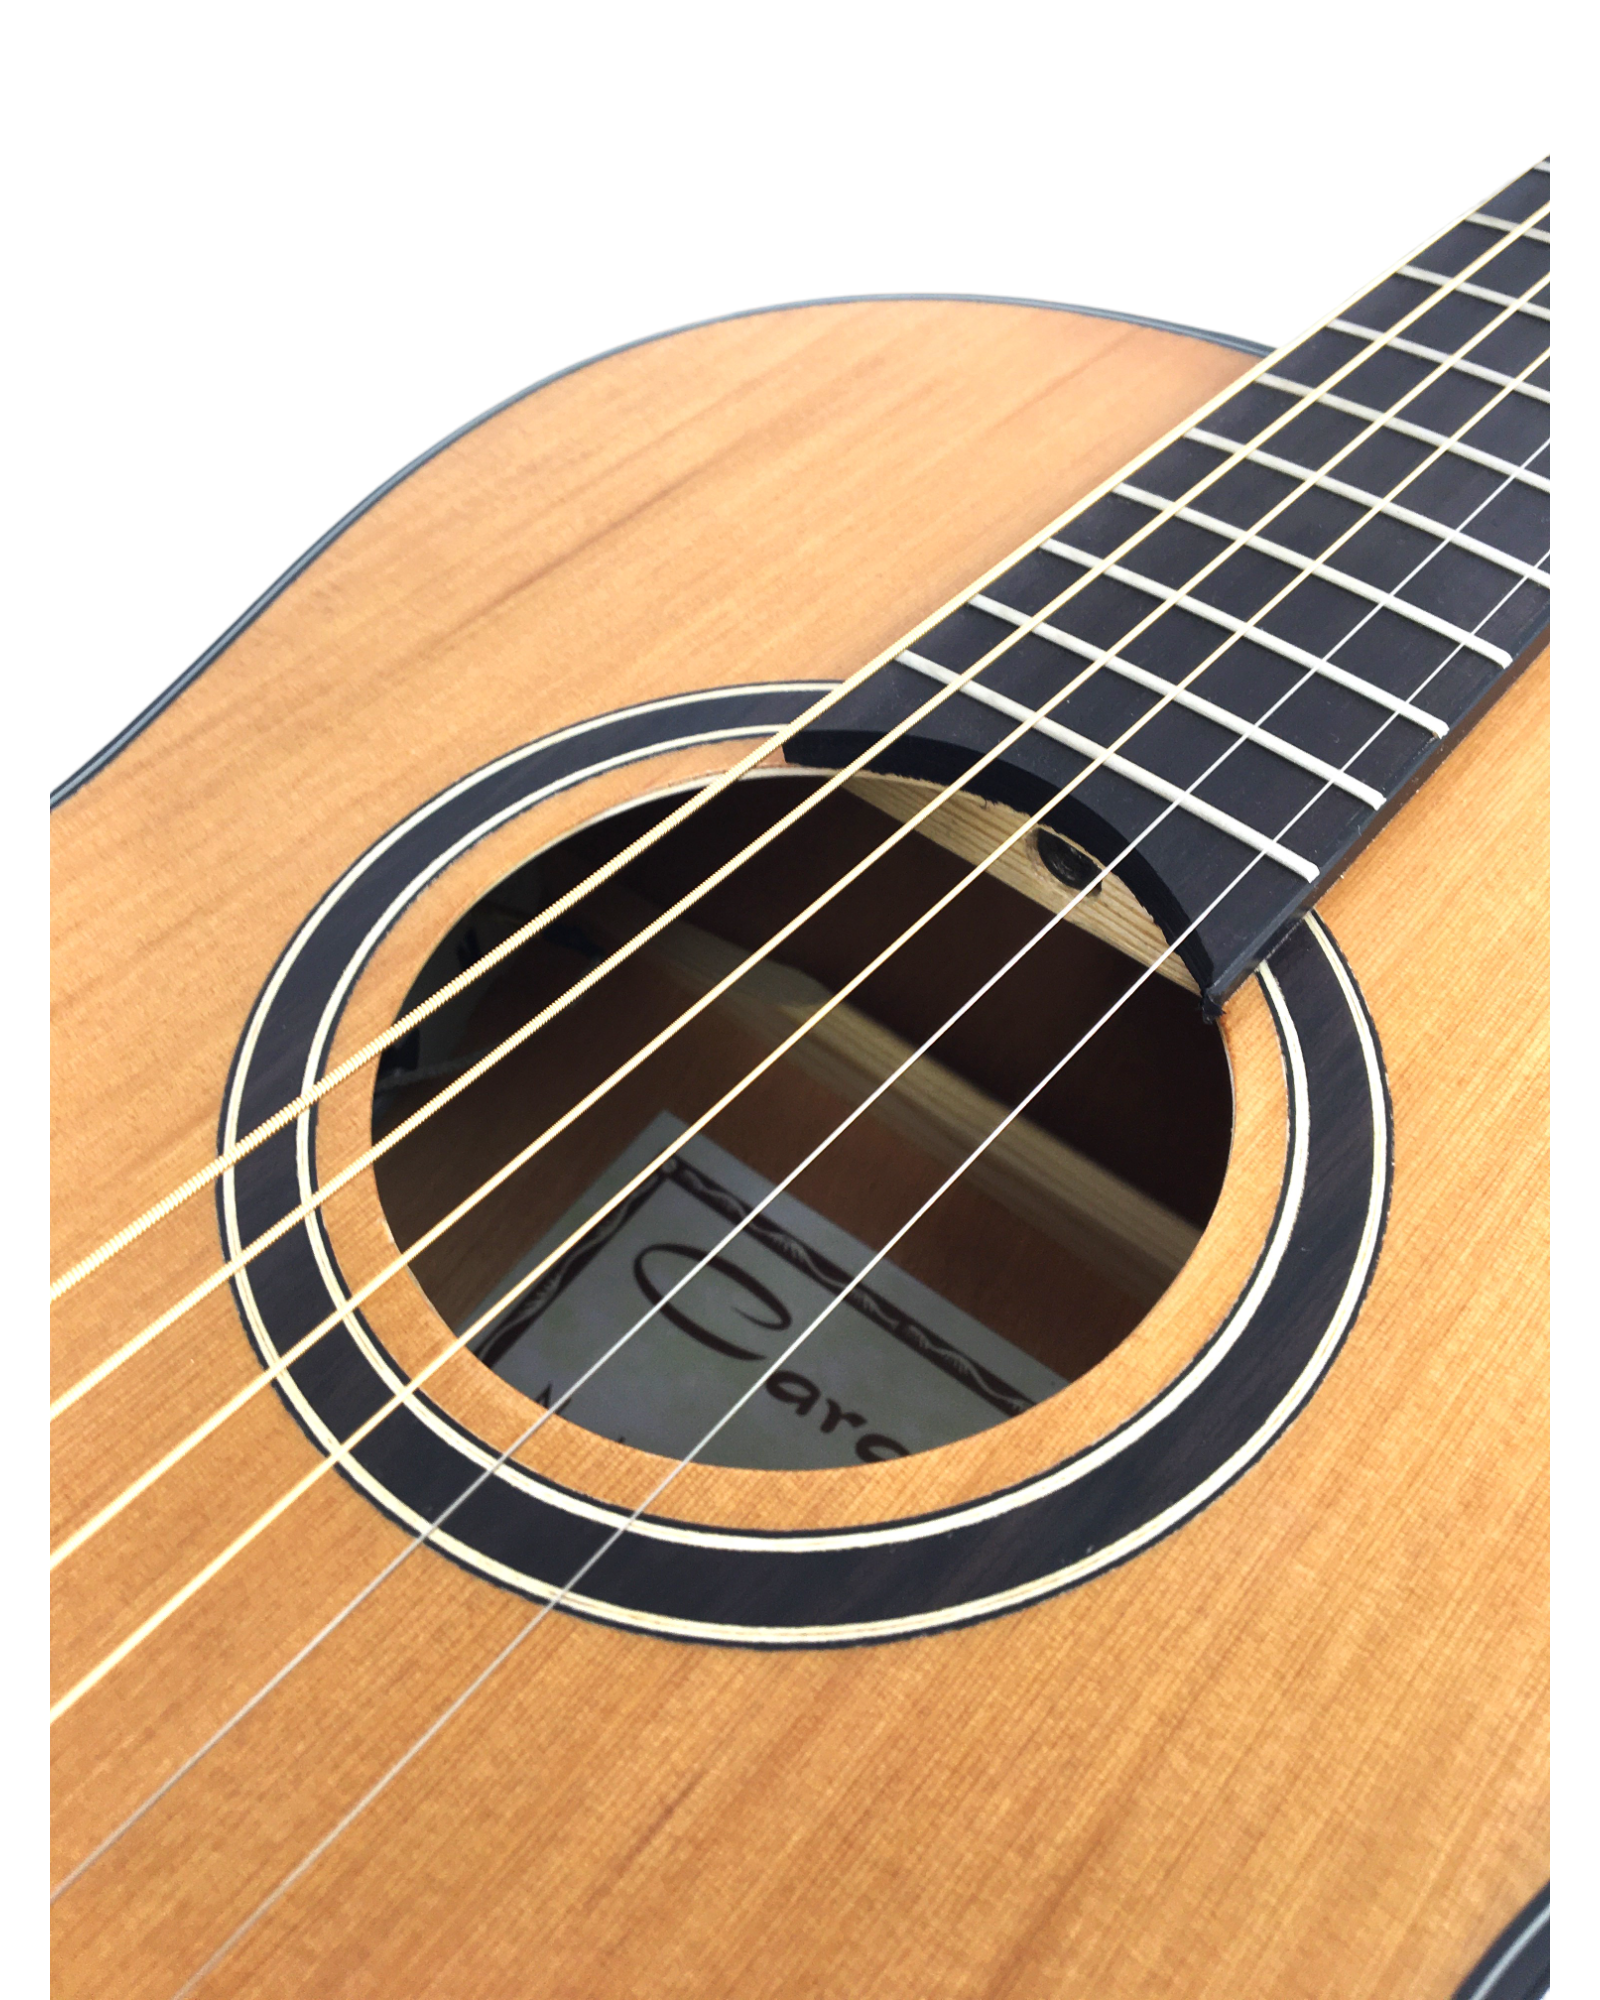 Caraya Parlor Cedar Top Built-In Pickups/Tuner Acoustic Guitar - Natural PARLOR610